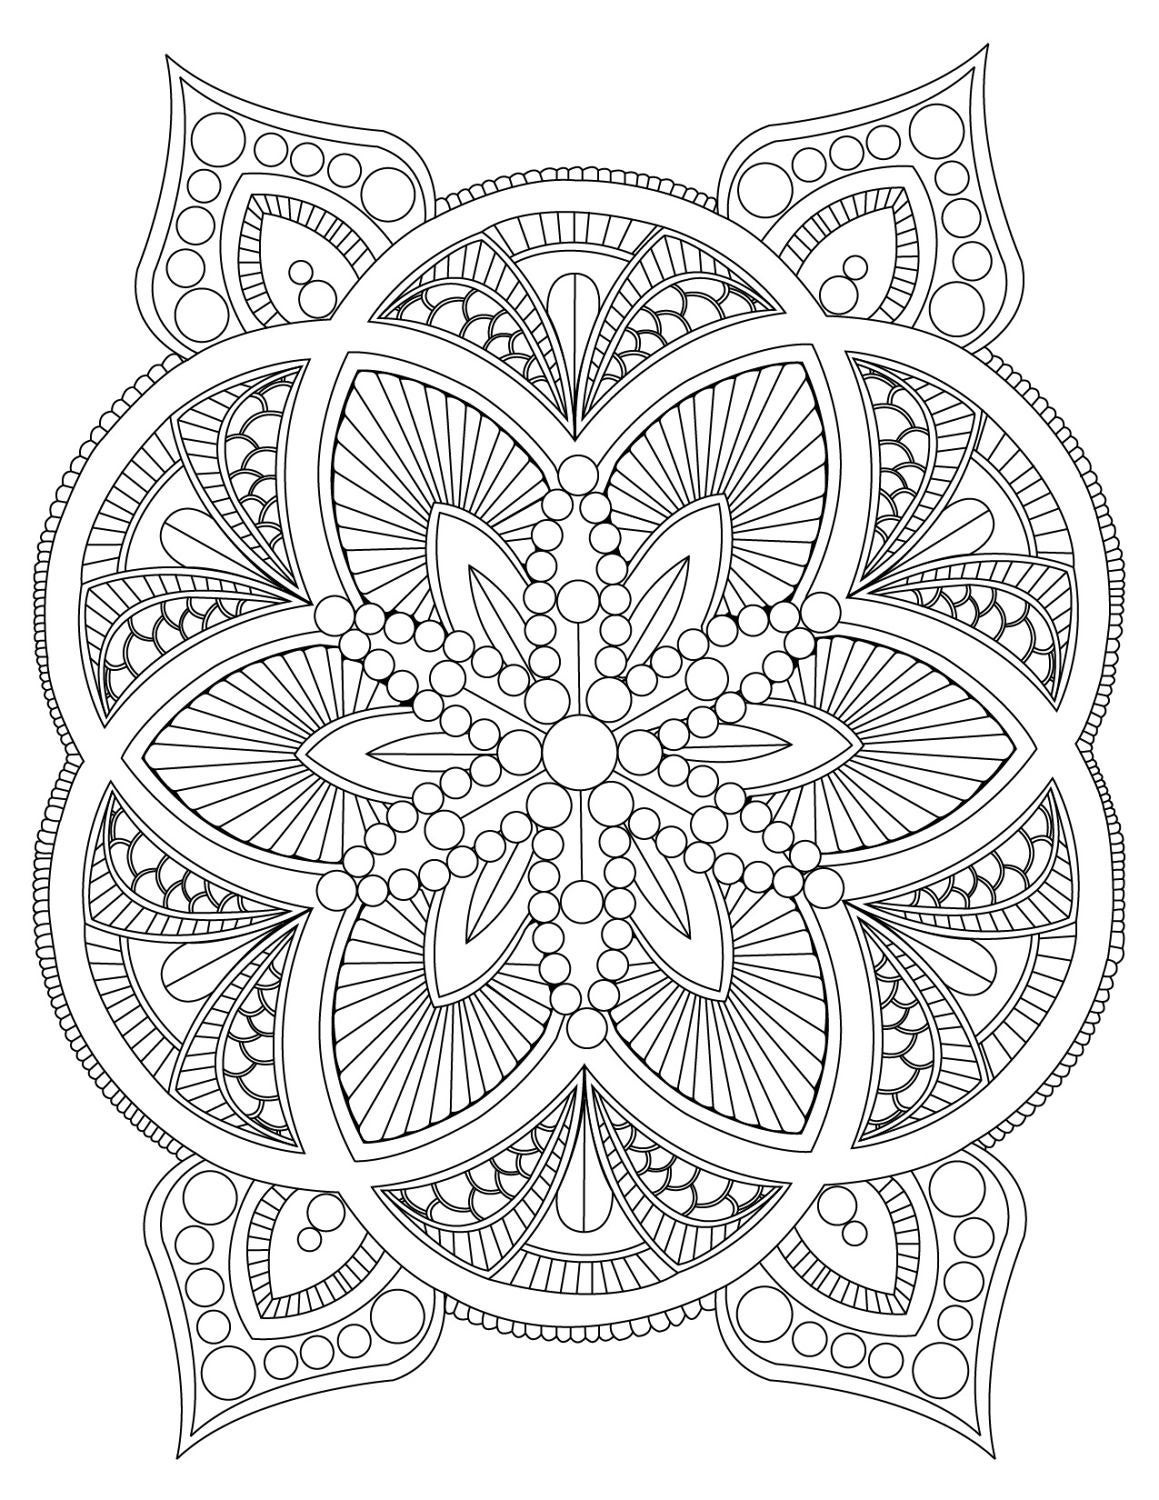 DIY Adult Coloring Book
 Abstract Mandala Coloring Page for Adults DIY Printable